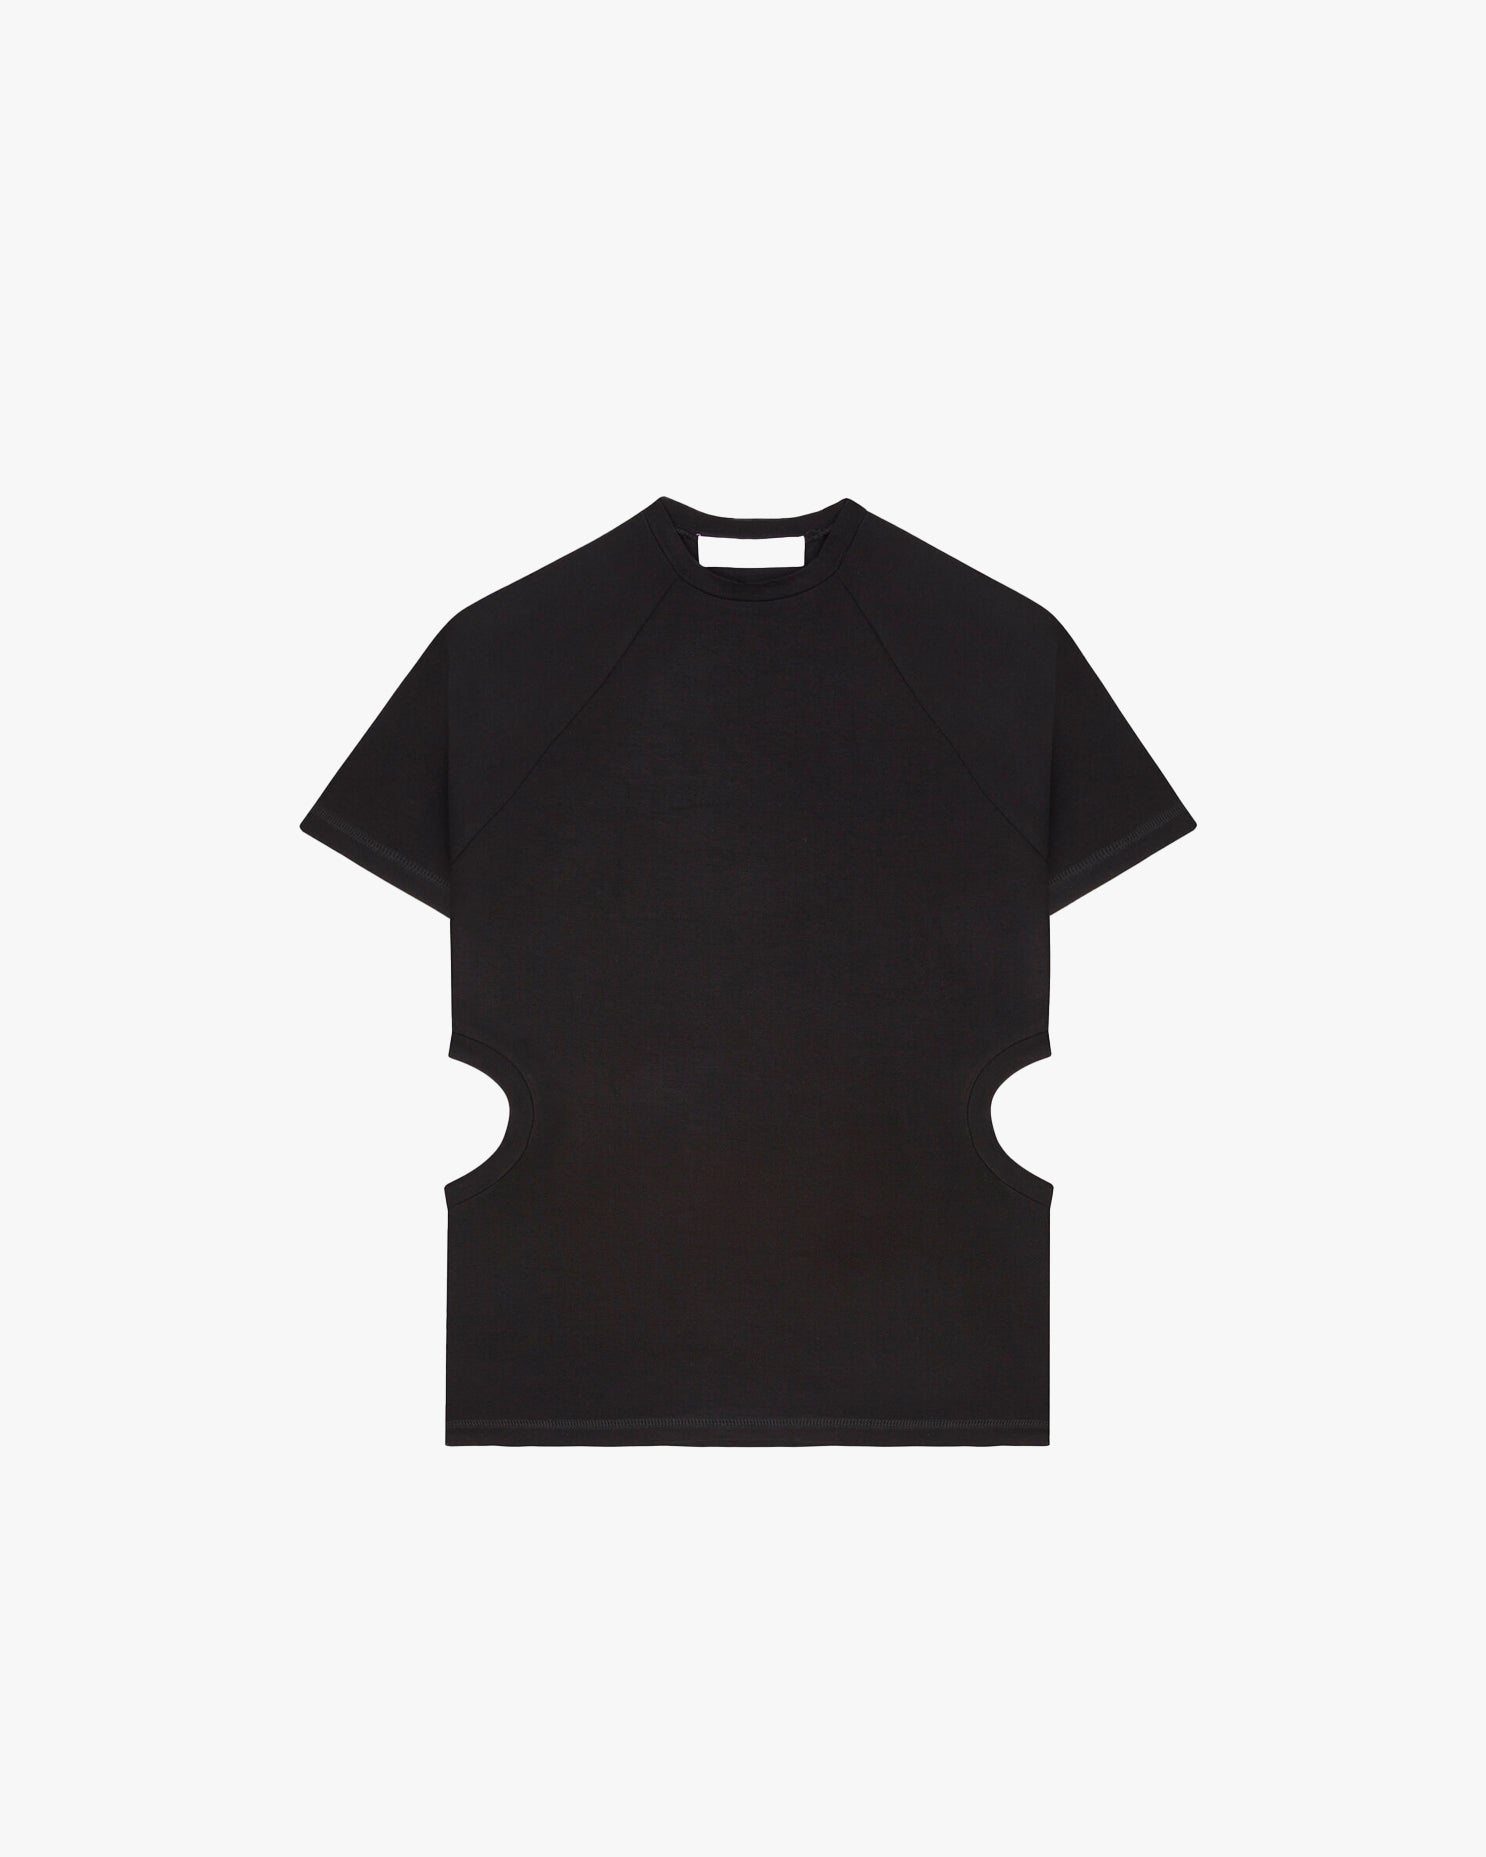 Raglan T-shirt with Cutouts in Black